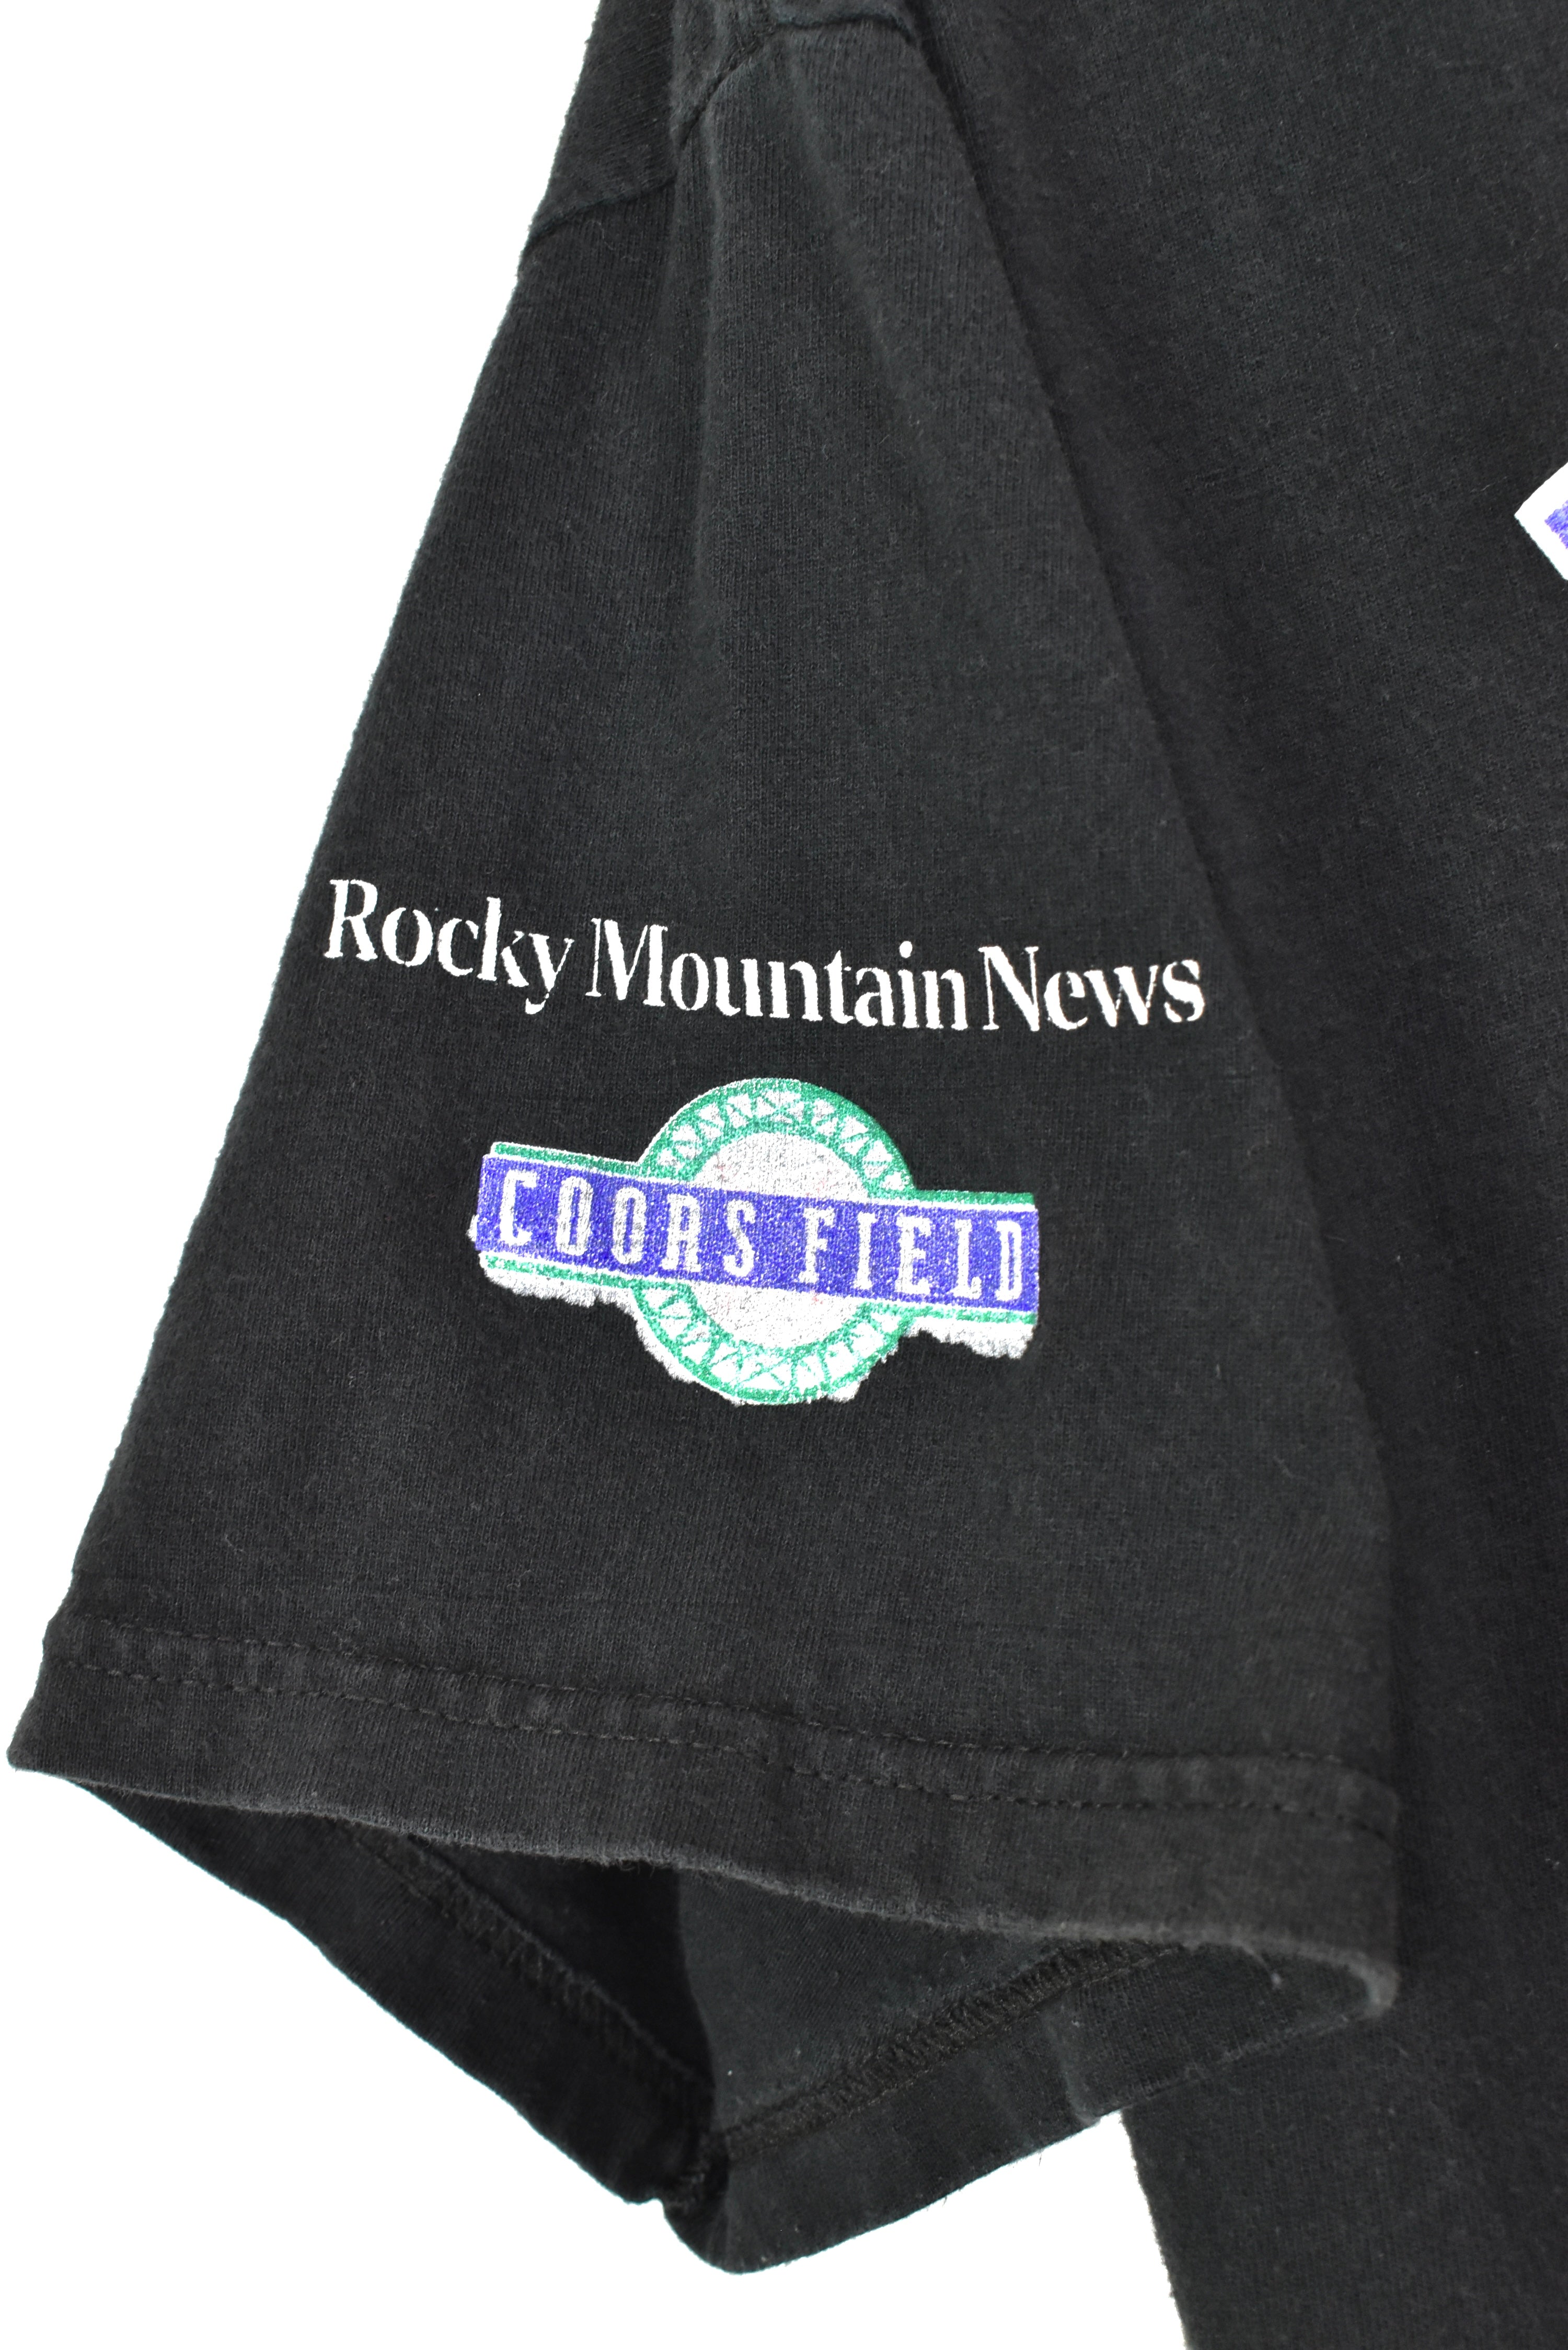 Vintage Colorado Rockies shirt, MLB graphic tee - large, black PRO SPORT